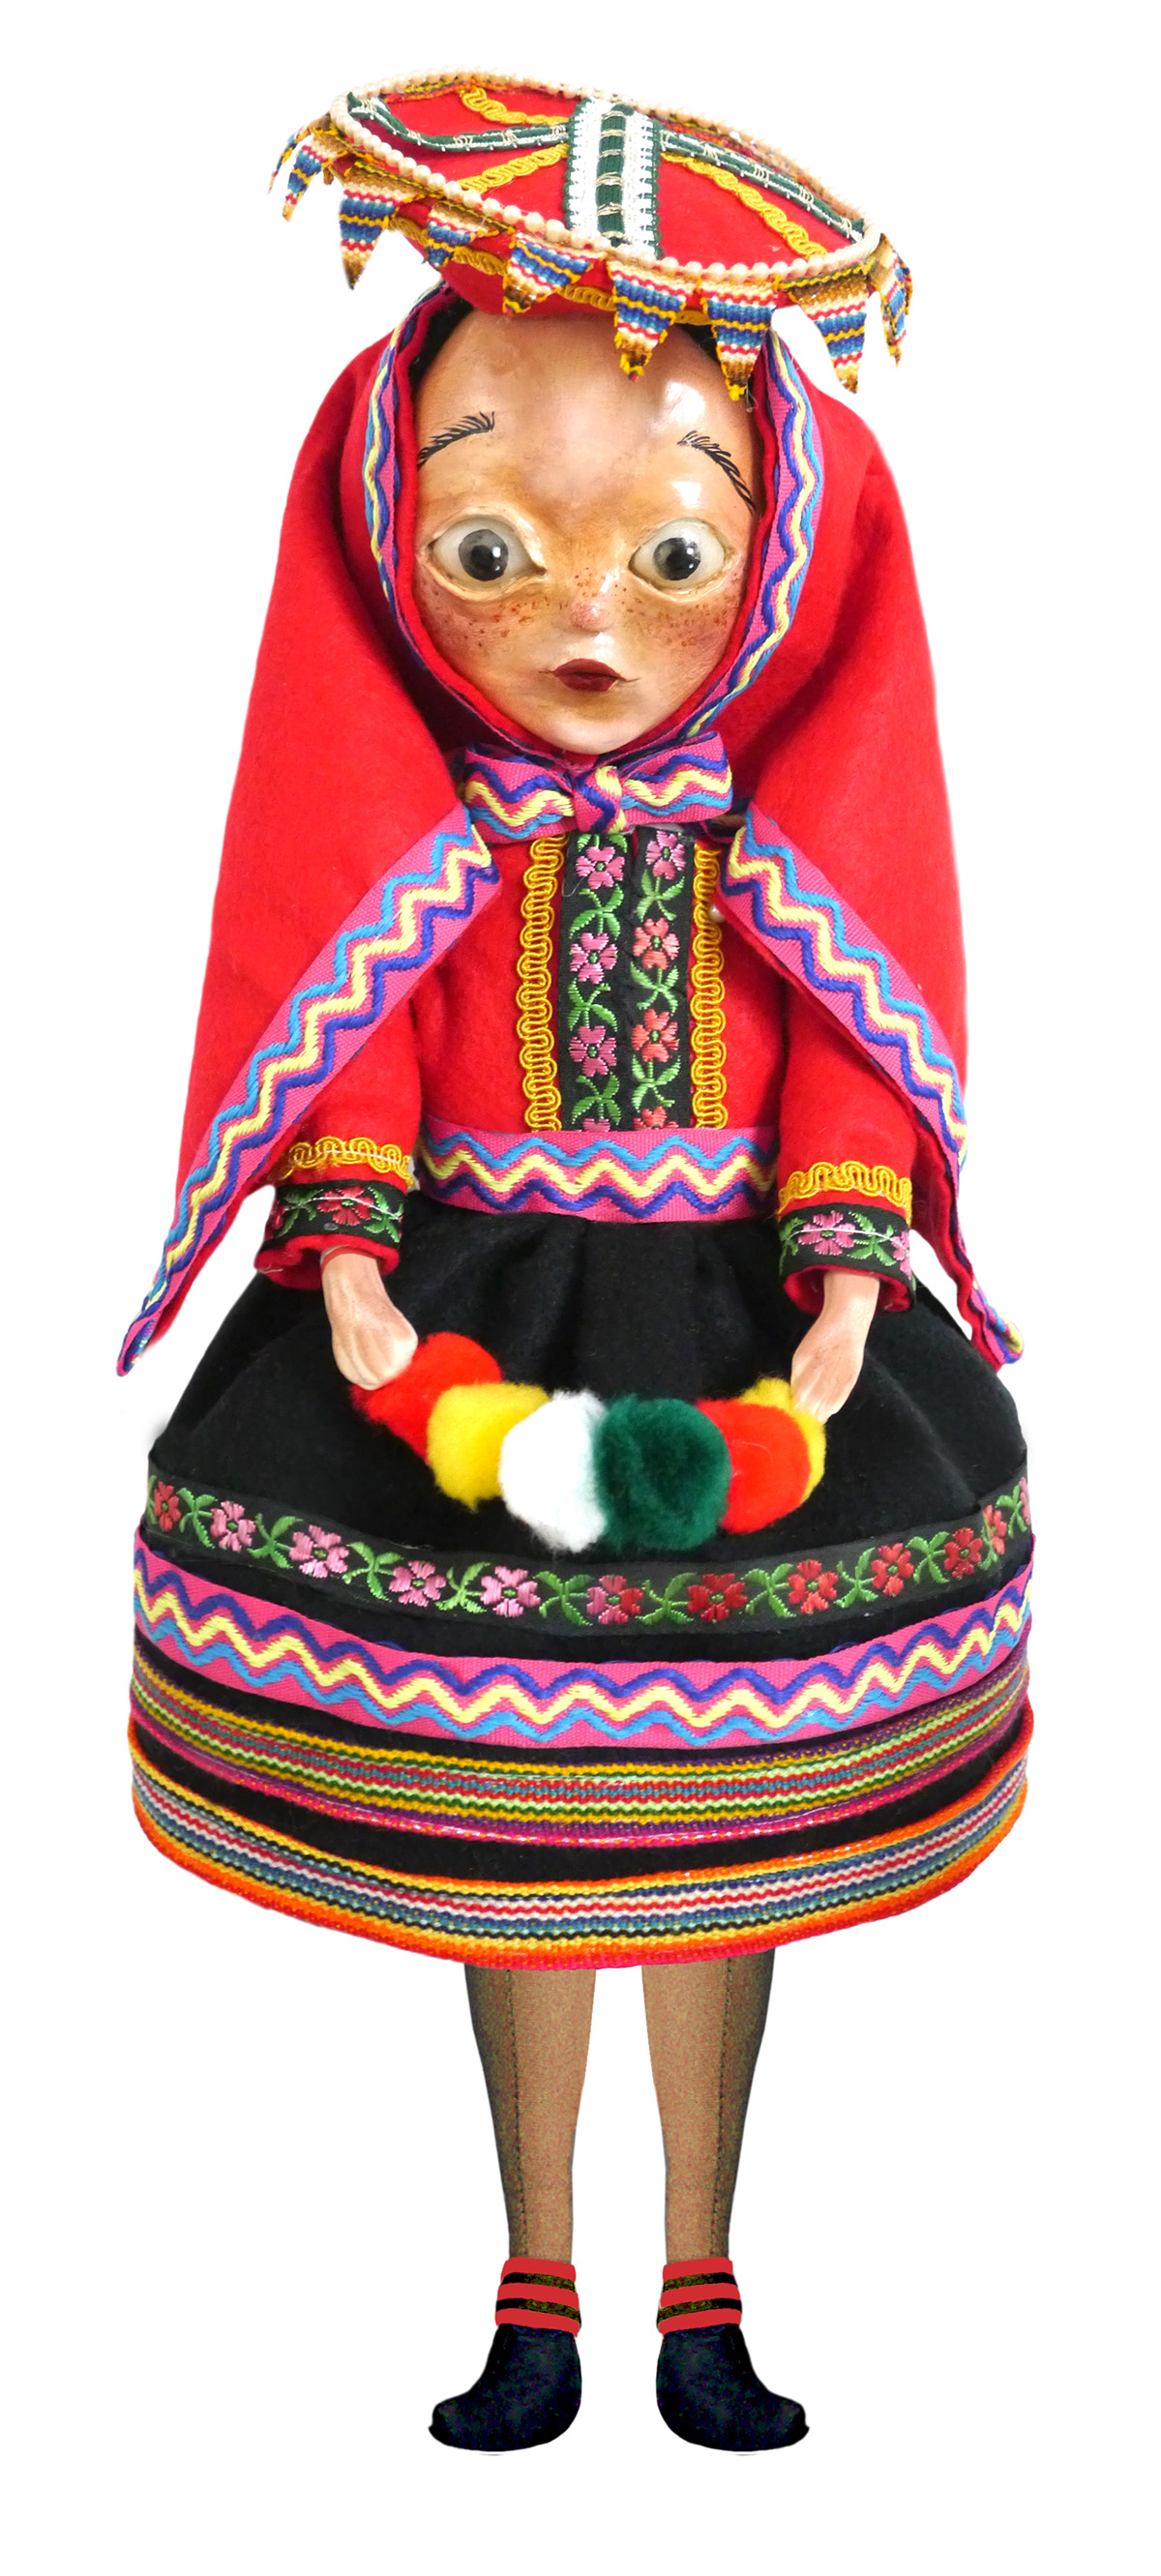 Andean Andes Mountains Artdoll doll Folklore handmade muñeca peru peruvian